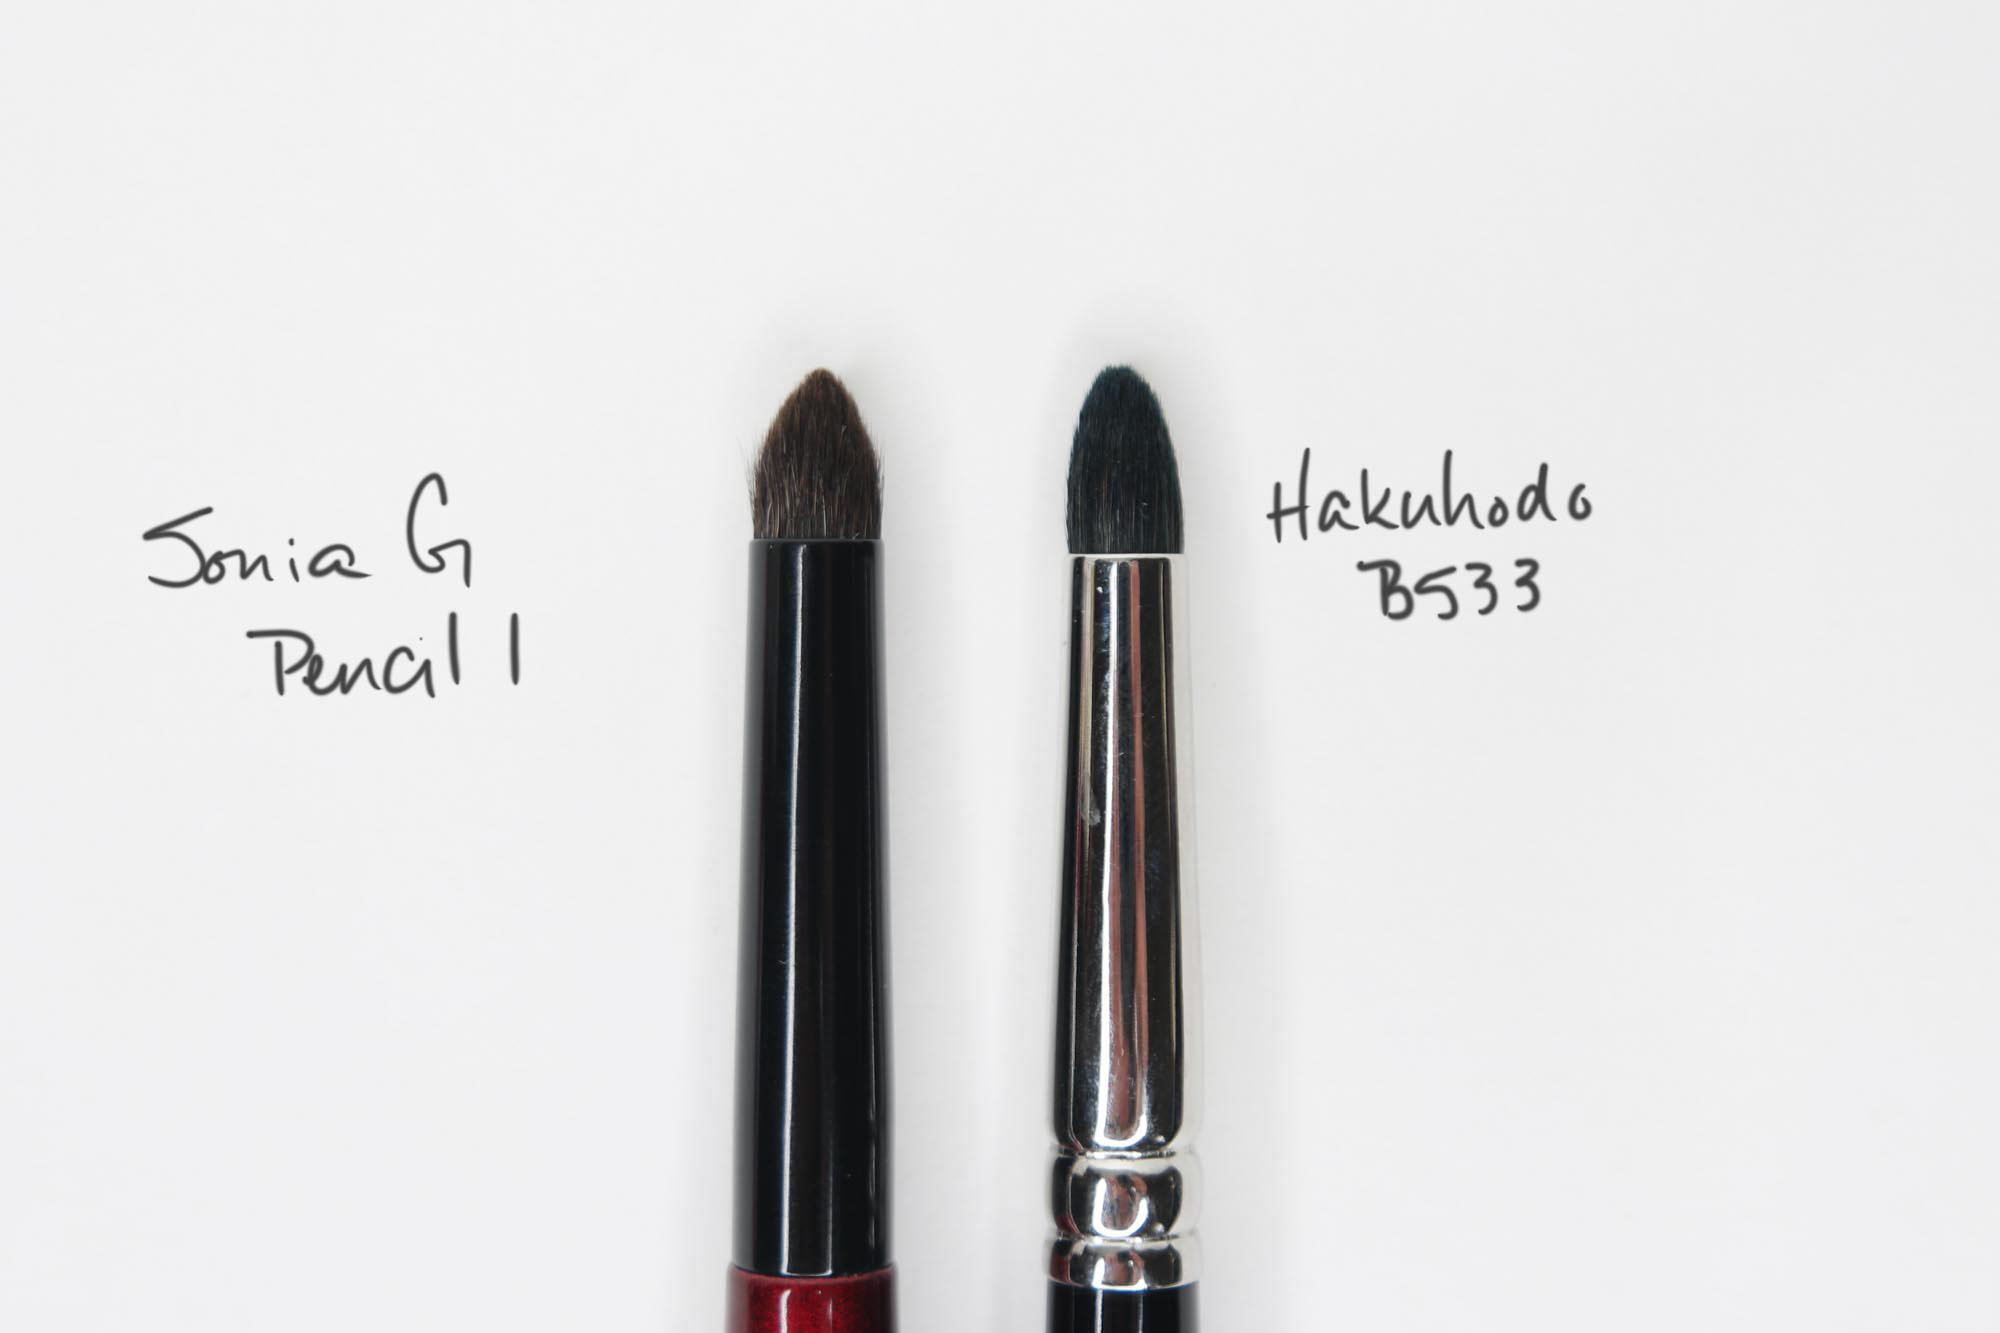 Sonia G Pencil 1 vs Hakuhodo B533